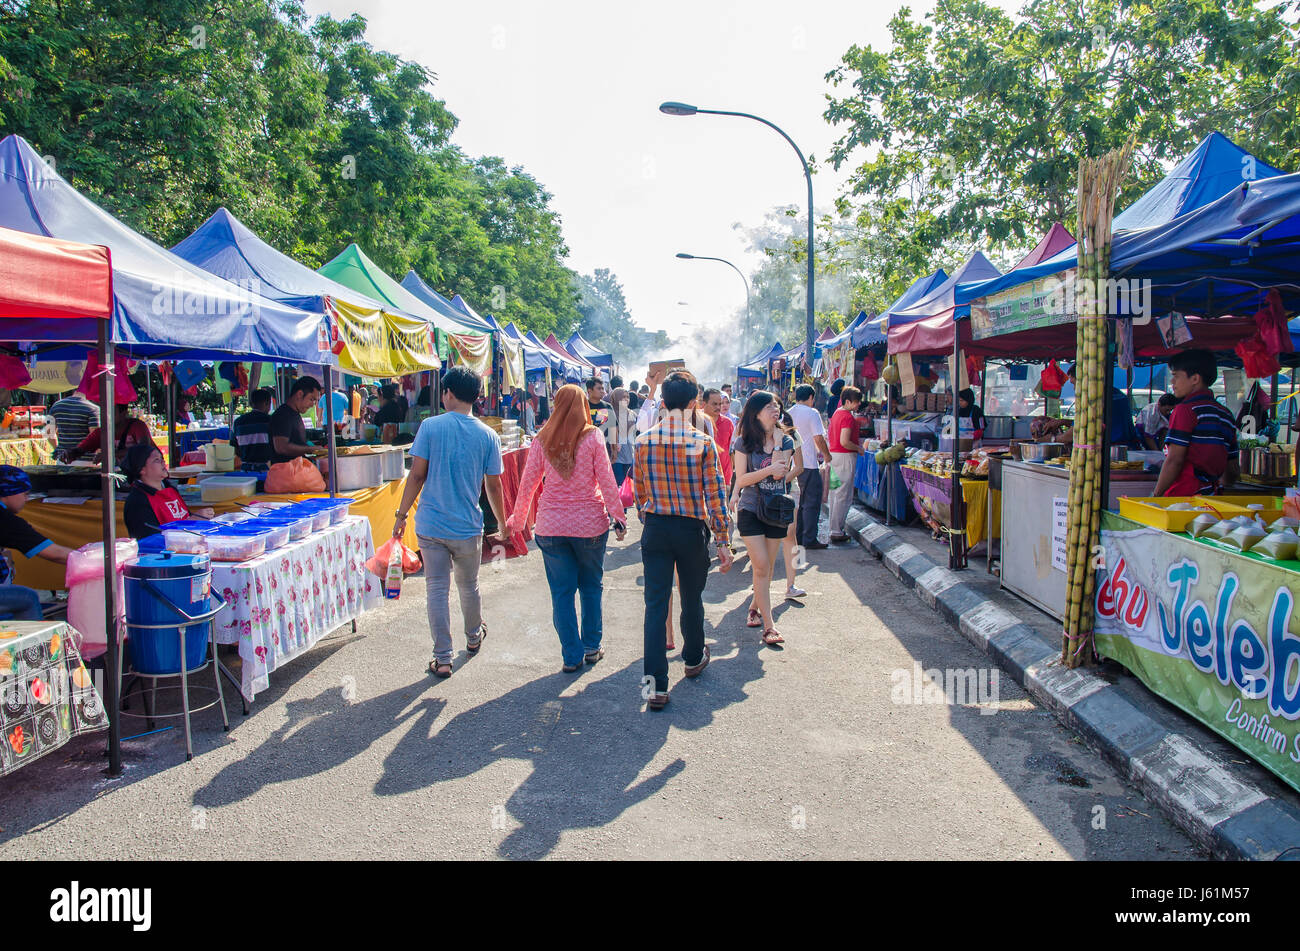 Kuala Lumpur,Malaysia - July 5, 2015: People seen walking and buying foods around the Ramadan Bazaar during the holy month of Ramadan. Stock Photo